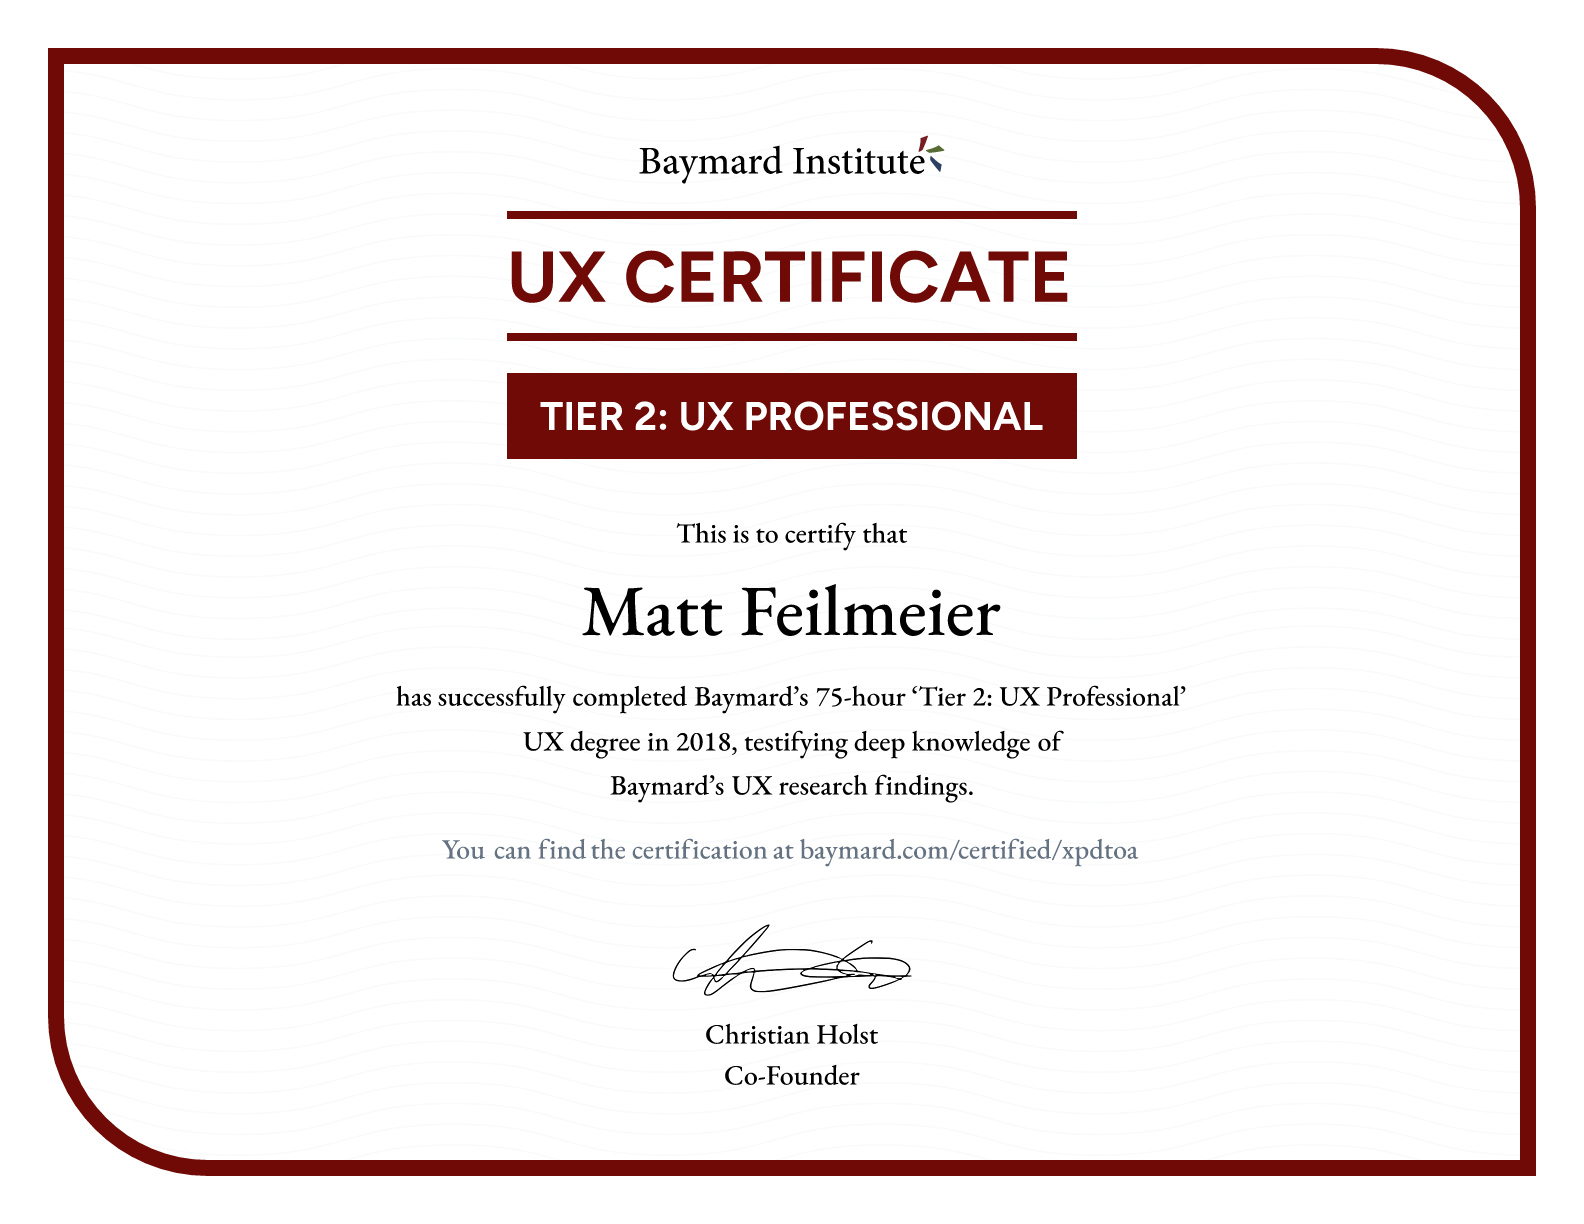 Matt Feilmeier’s certificate